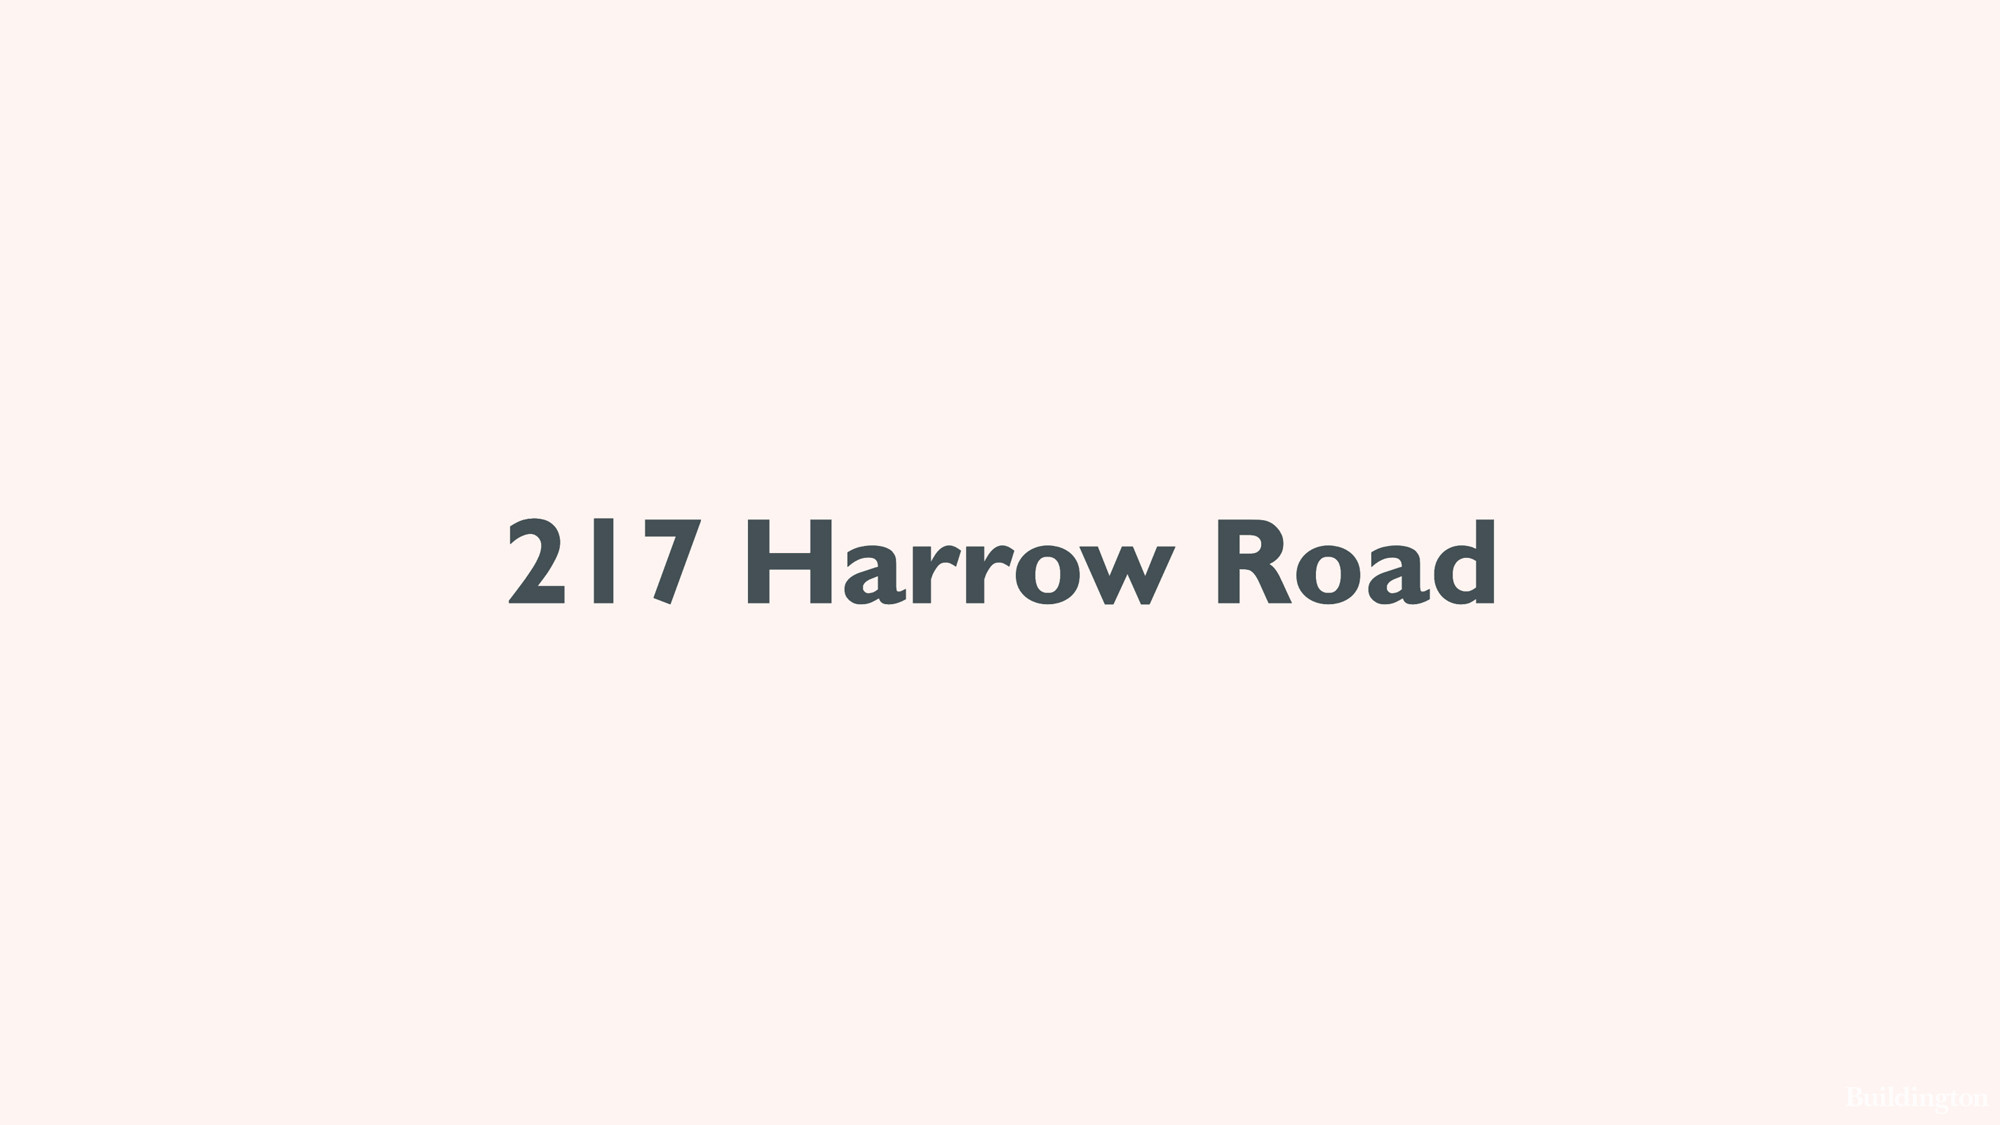 217 Harrow Road development by St Mungo's.